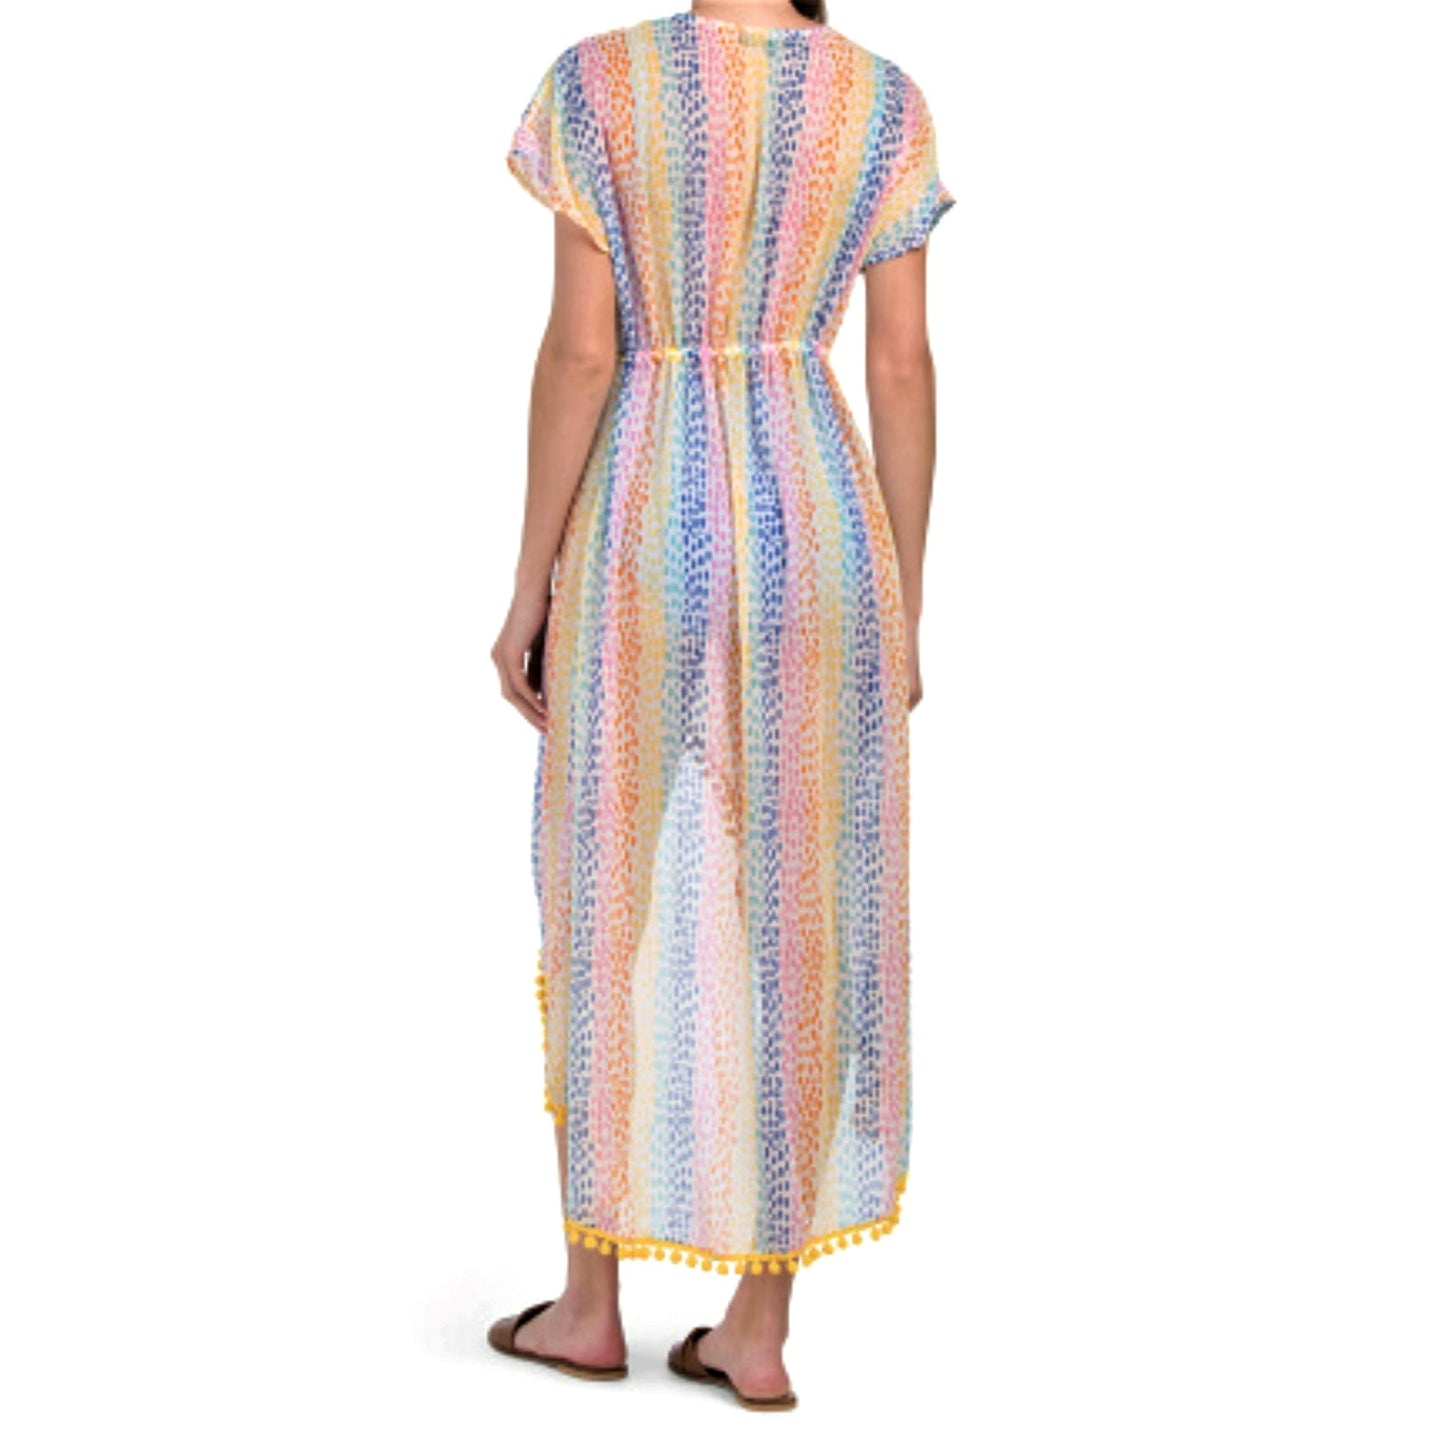 AMERICA & BEYOND Semi-Sheer Cheetah Rainbow Stripes Cover-Up Dress